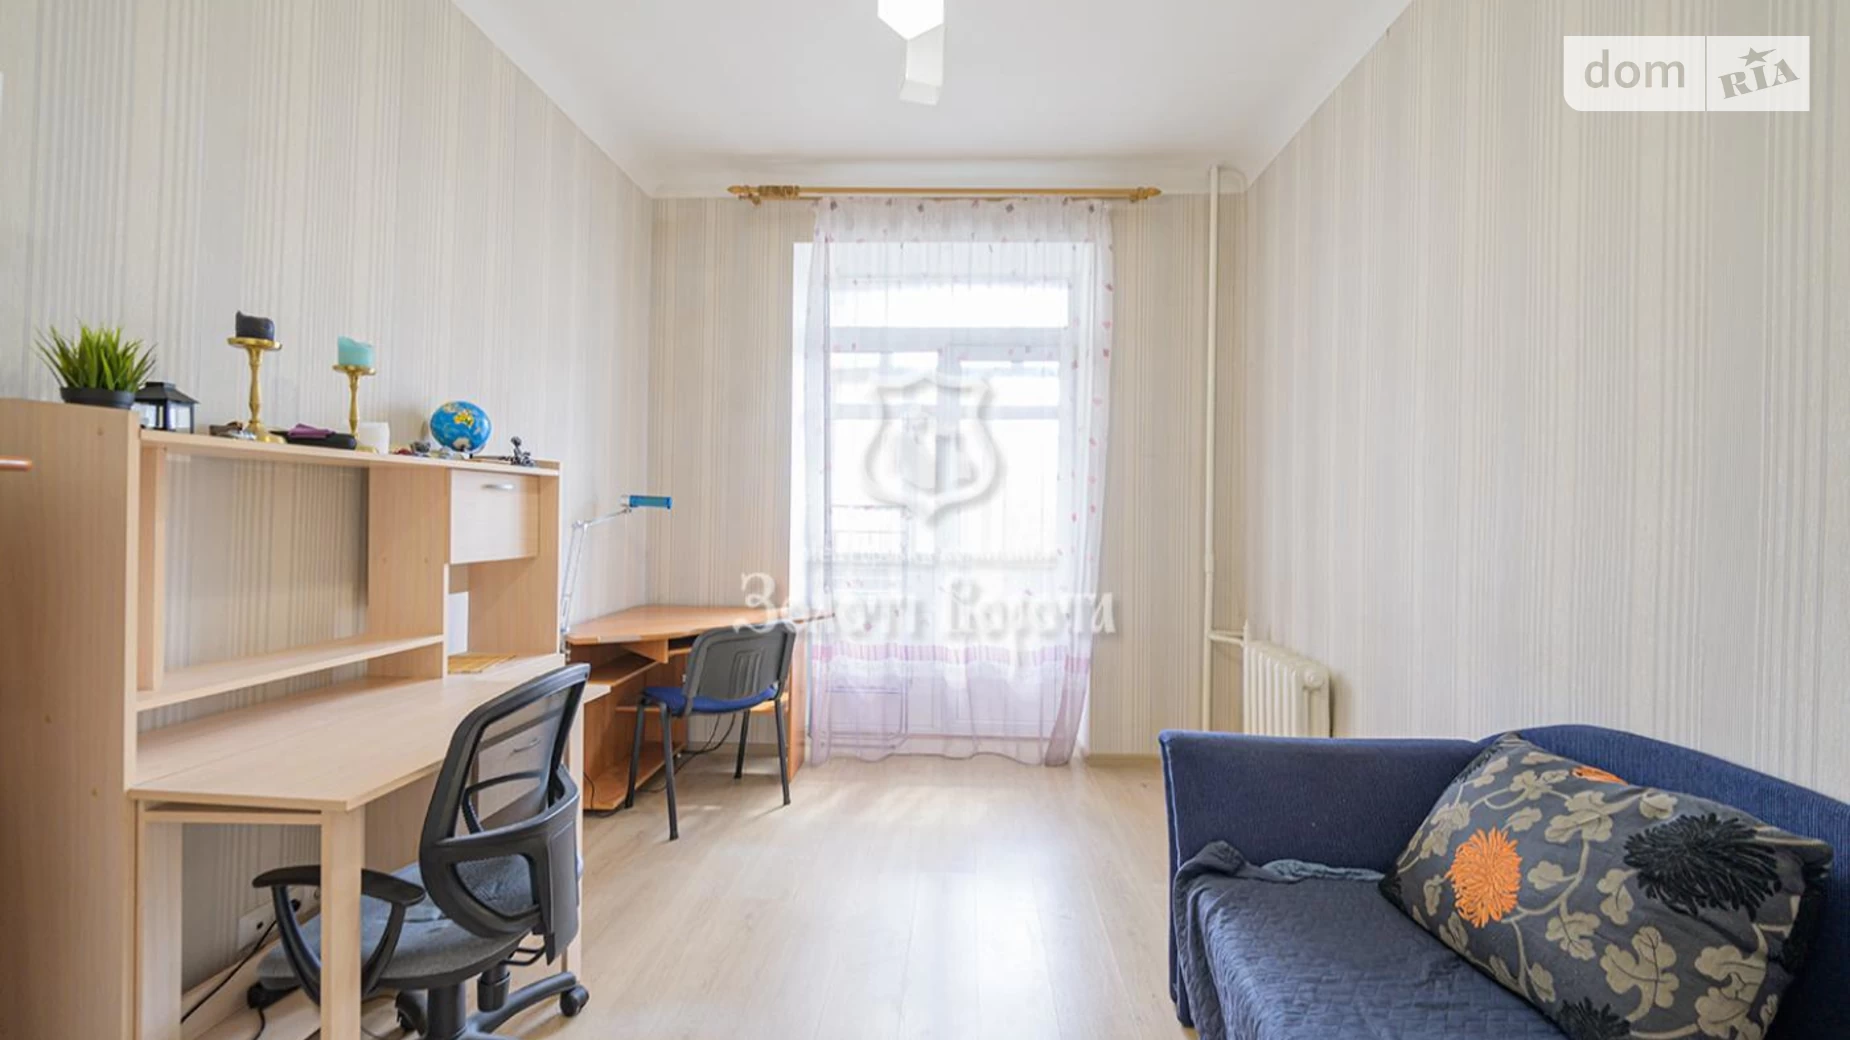 Продается 2-комнатная квартира 53.5 кв. м в Киеве, ул. Адама Мицкевича, 10 - фото 3